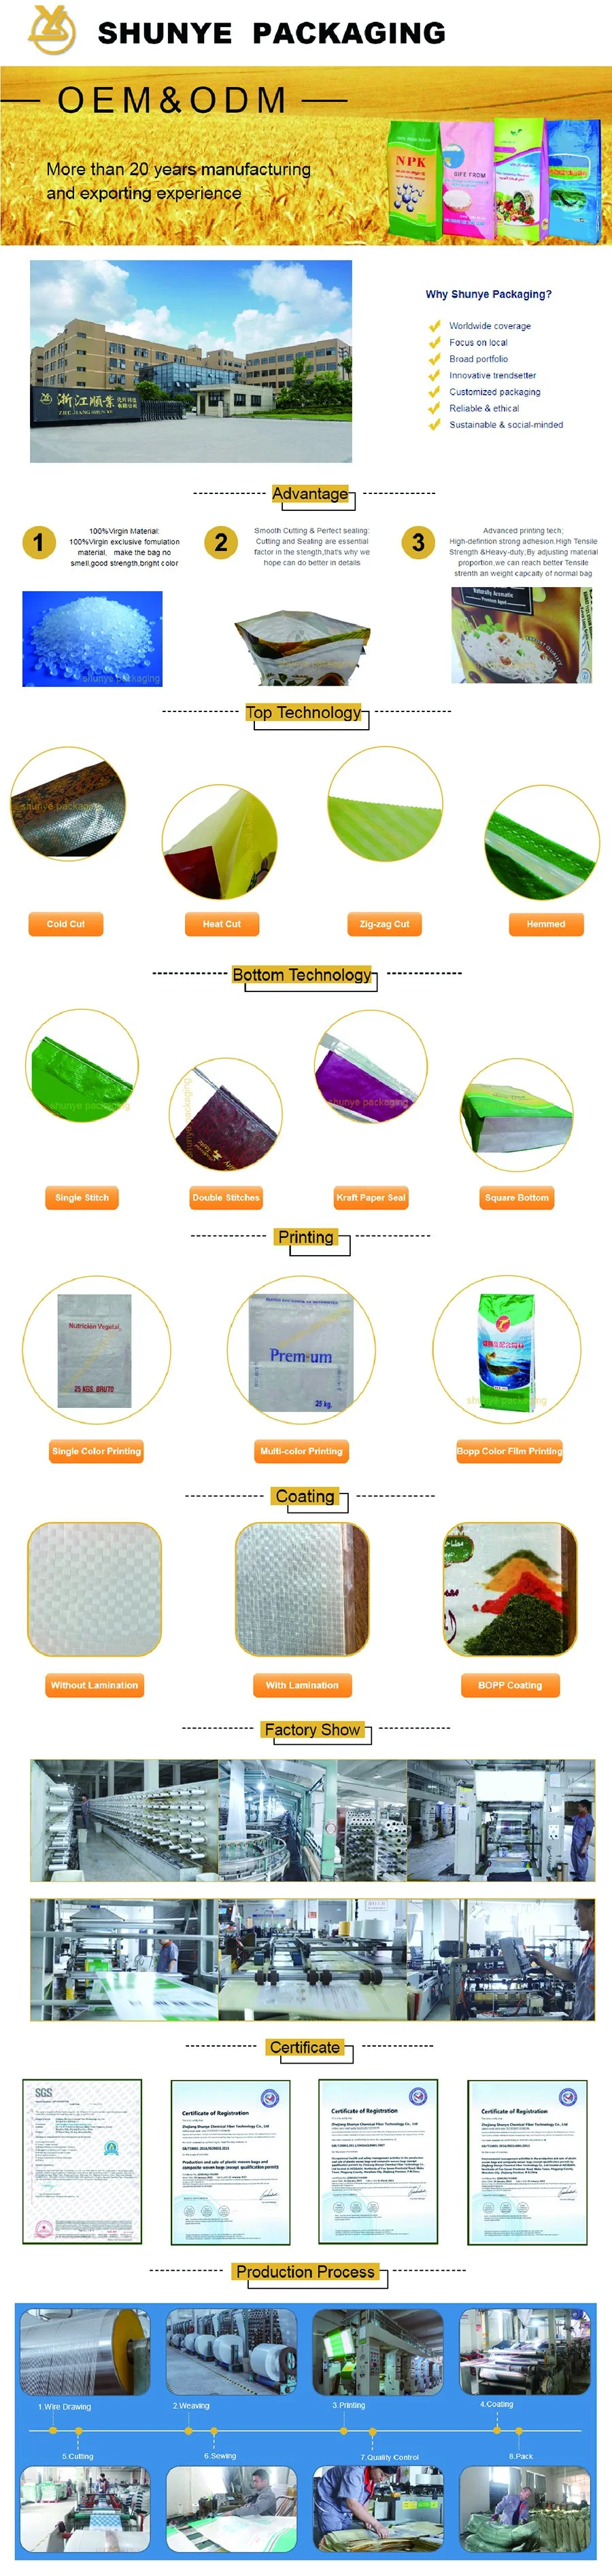 50kg Flour Feed Rice Plastic Packaging Fertilizer Woven Polypropylene Bag